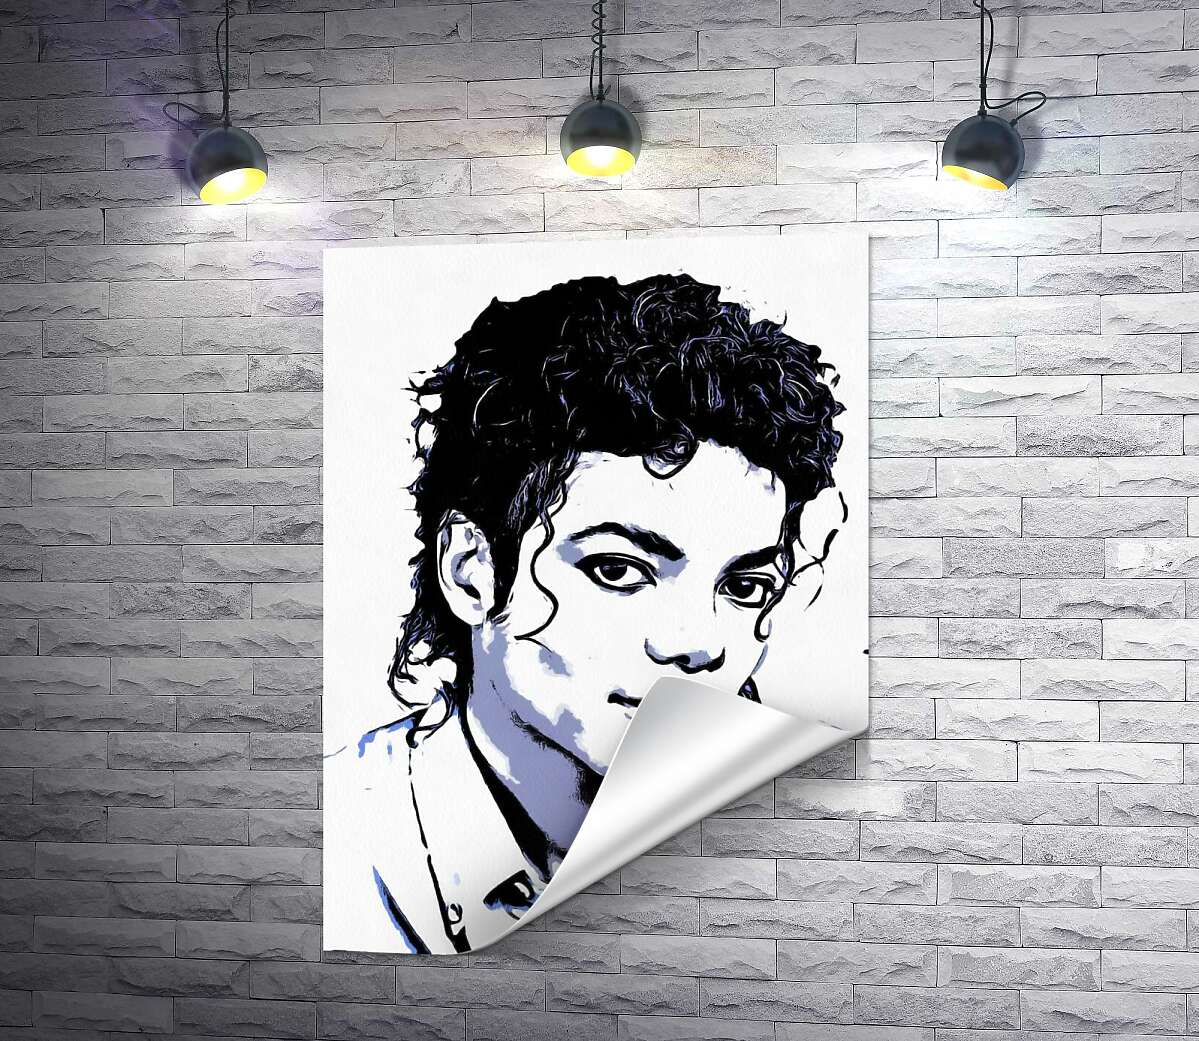 друк Чорно-білий тон портрету Майкла Джексона (Michael Jackson)